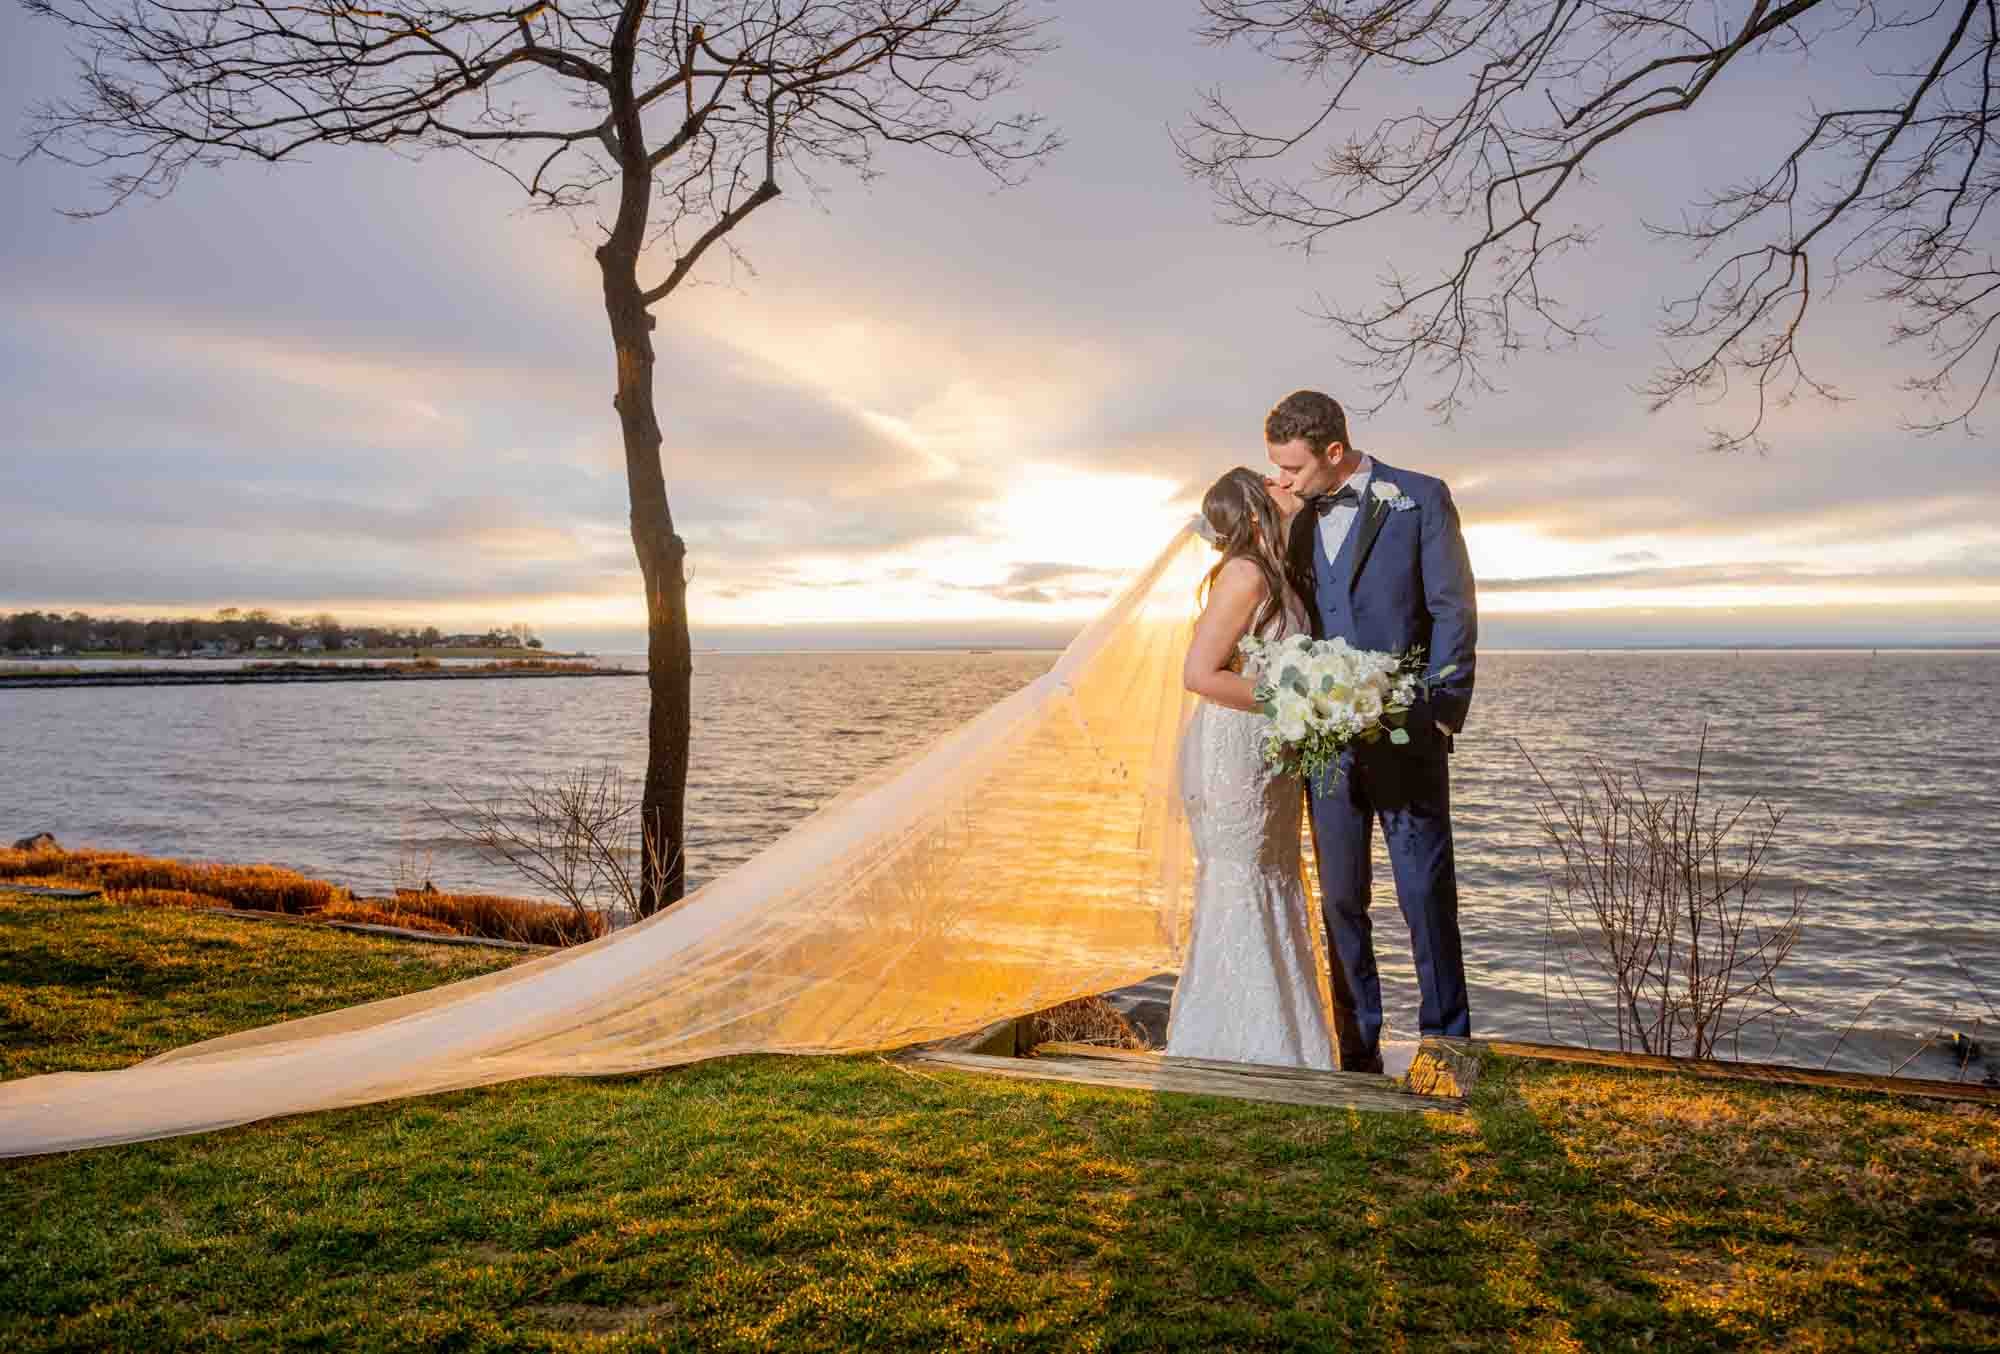 Chesapeake-Bay-Beach-Club-sunset-bride-and -groom-7134.jpg